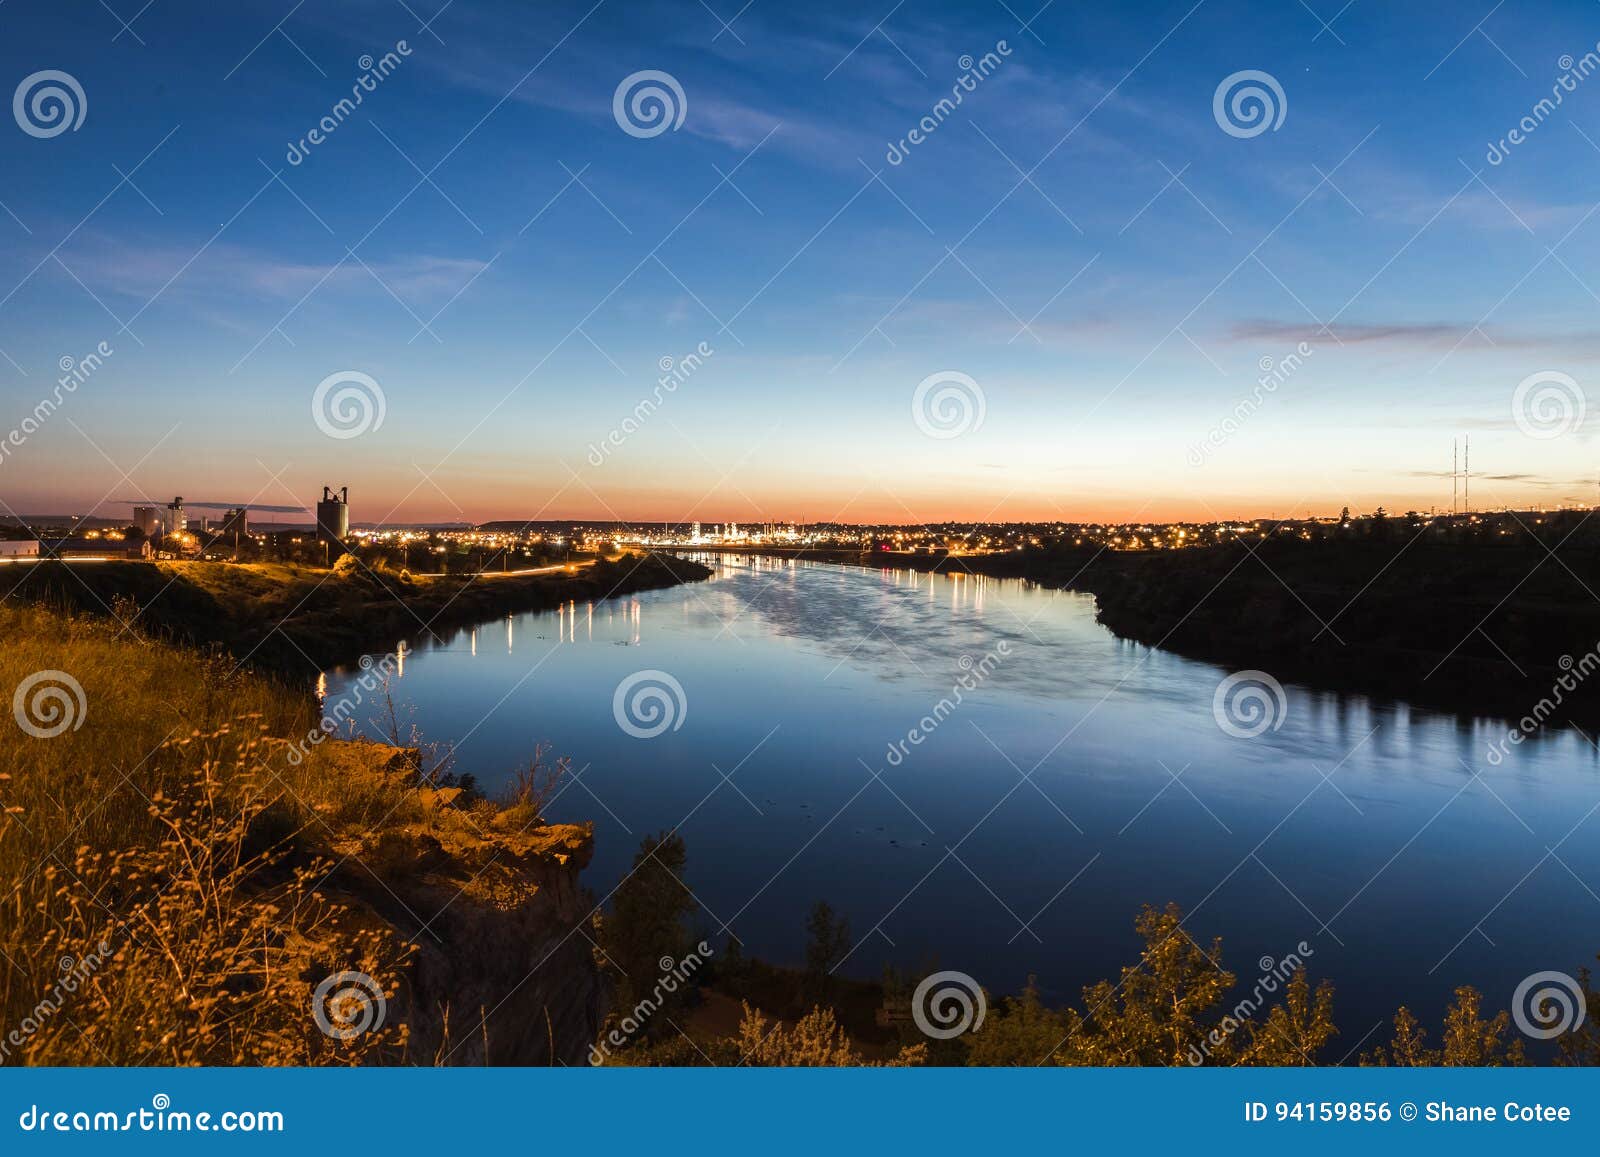 city lights over the missouri river